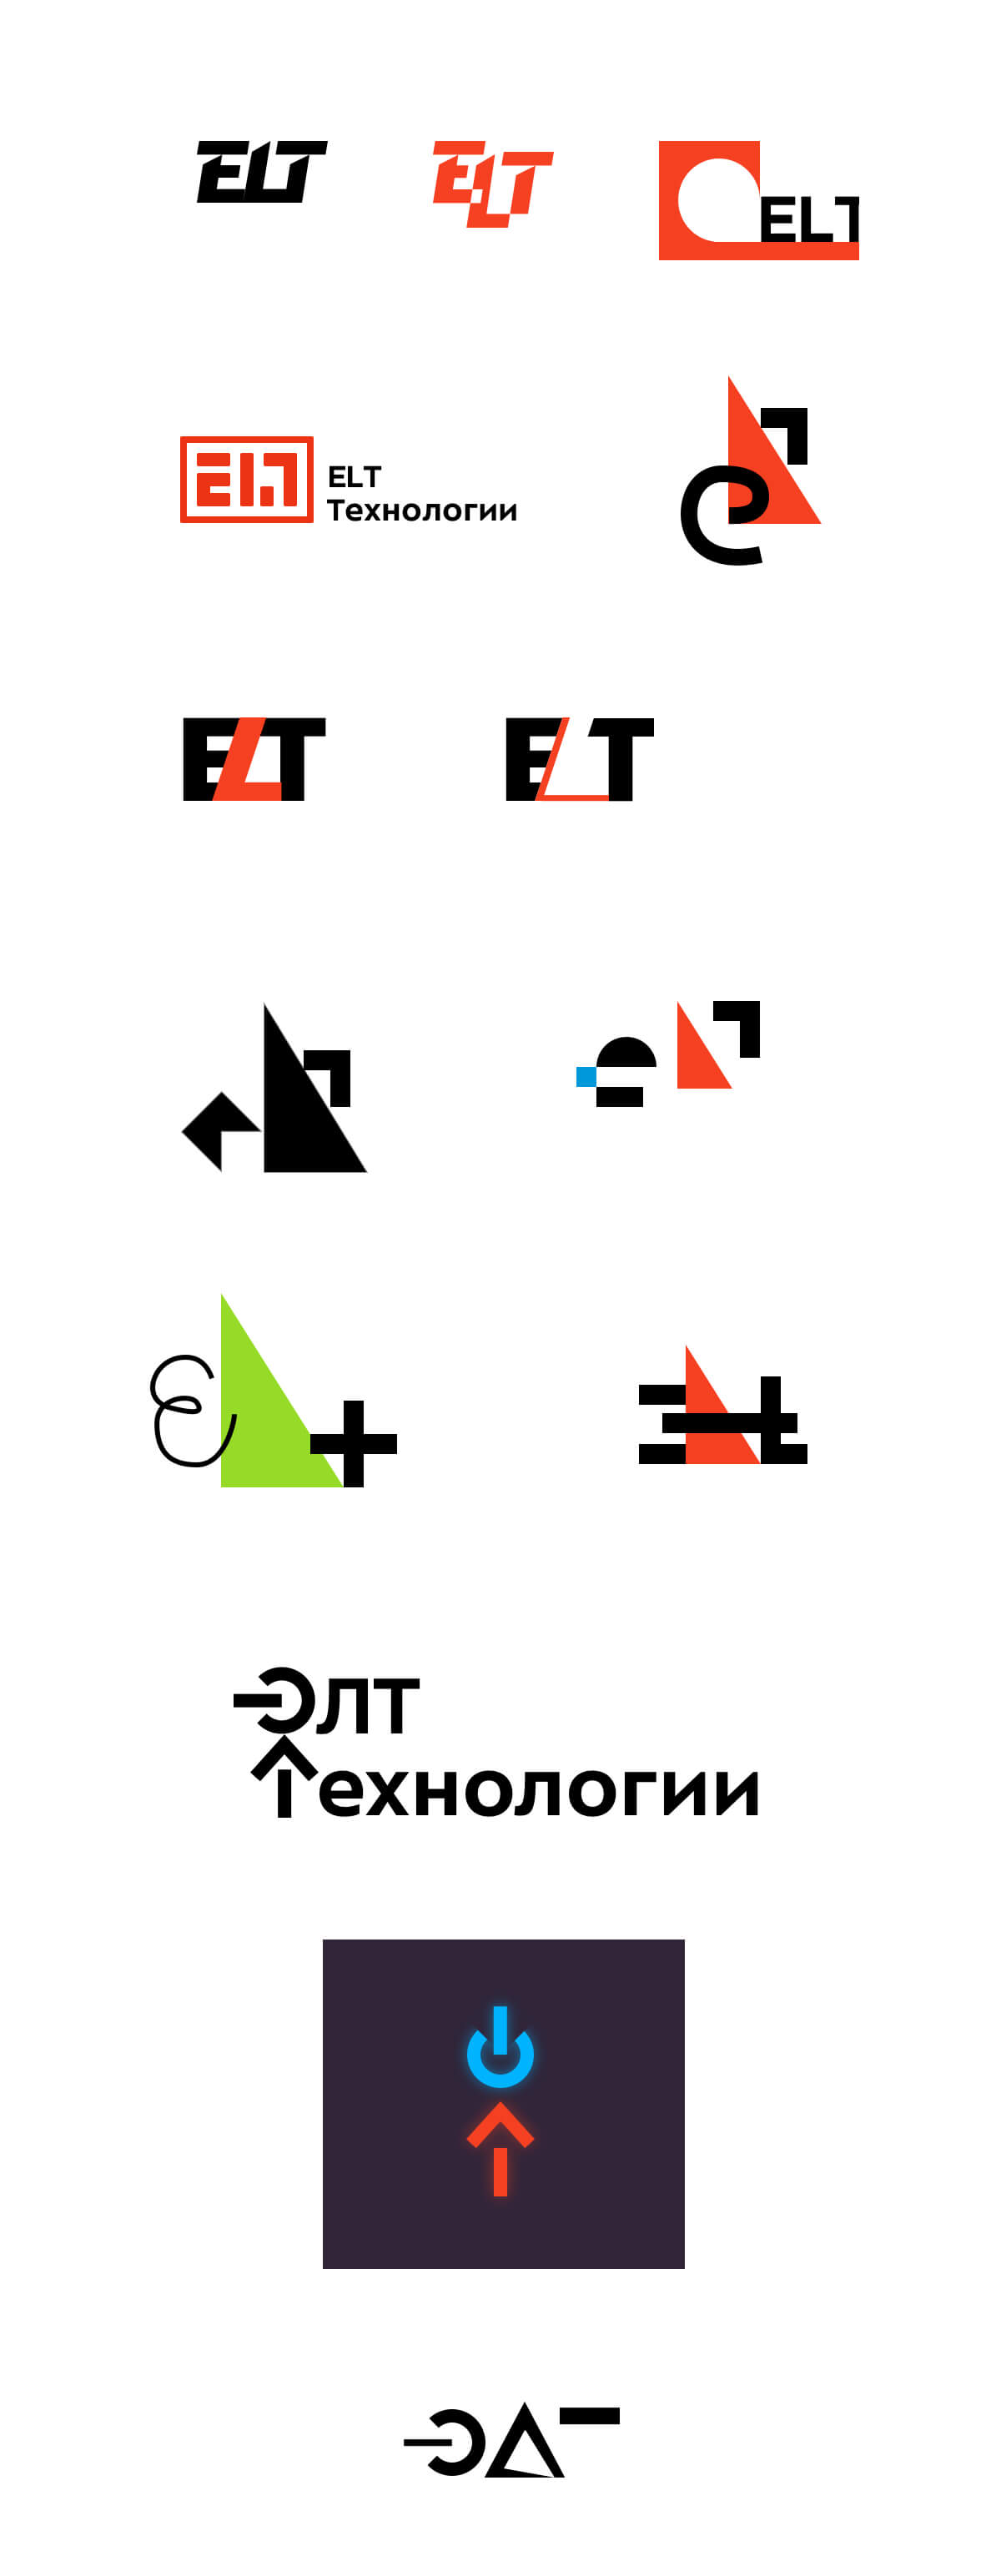 elt logo process 02